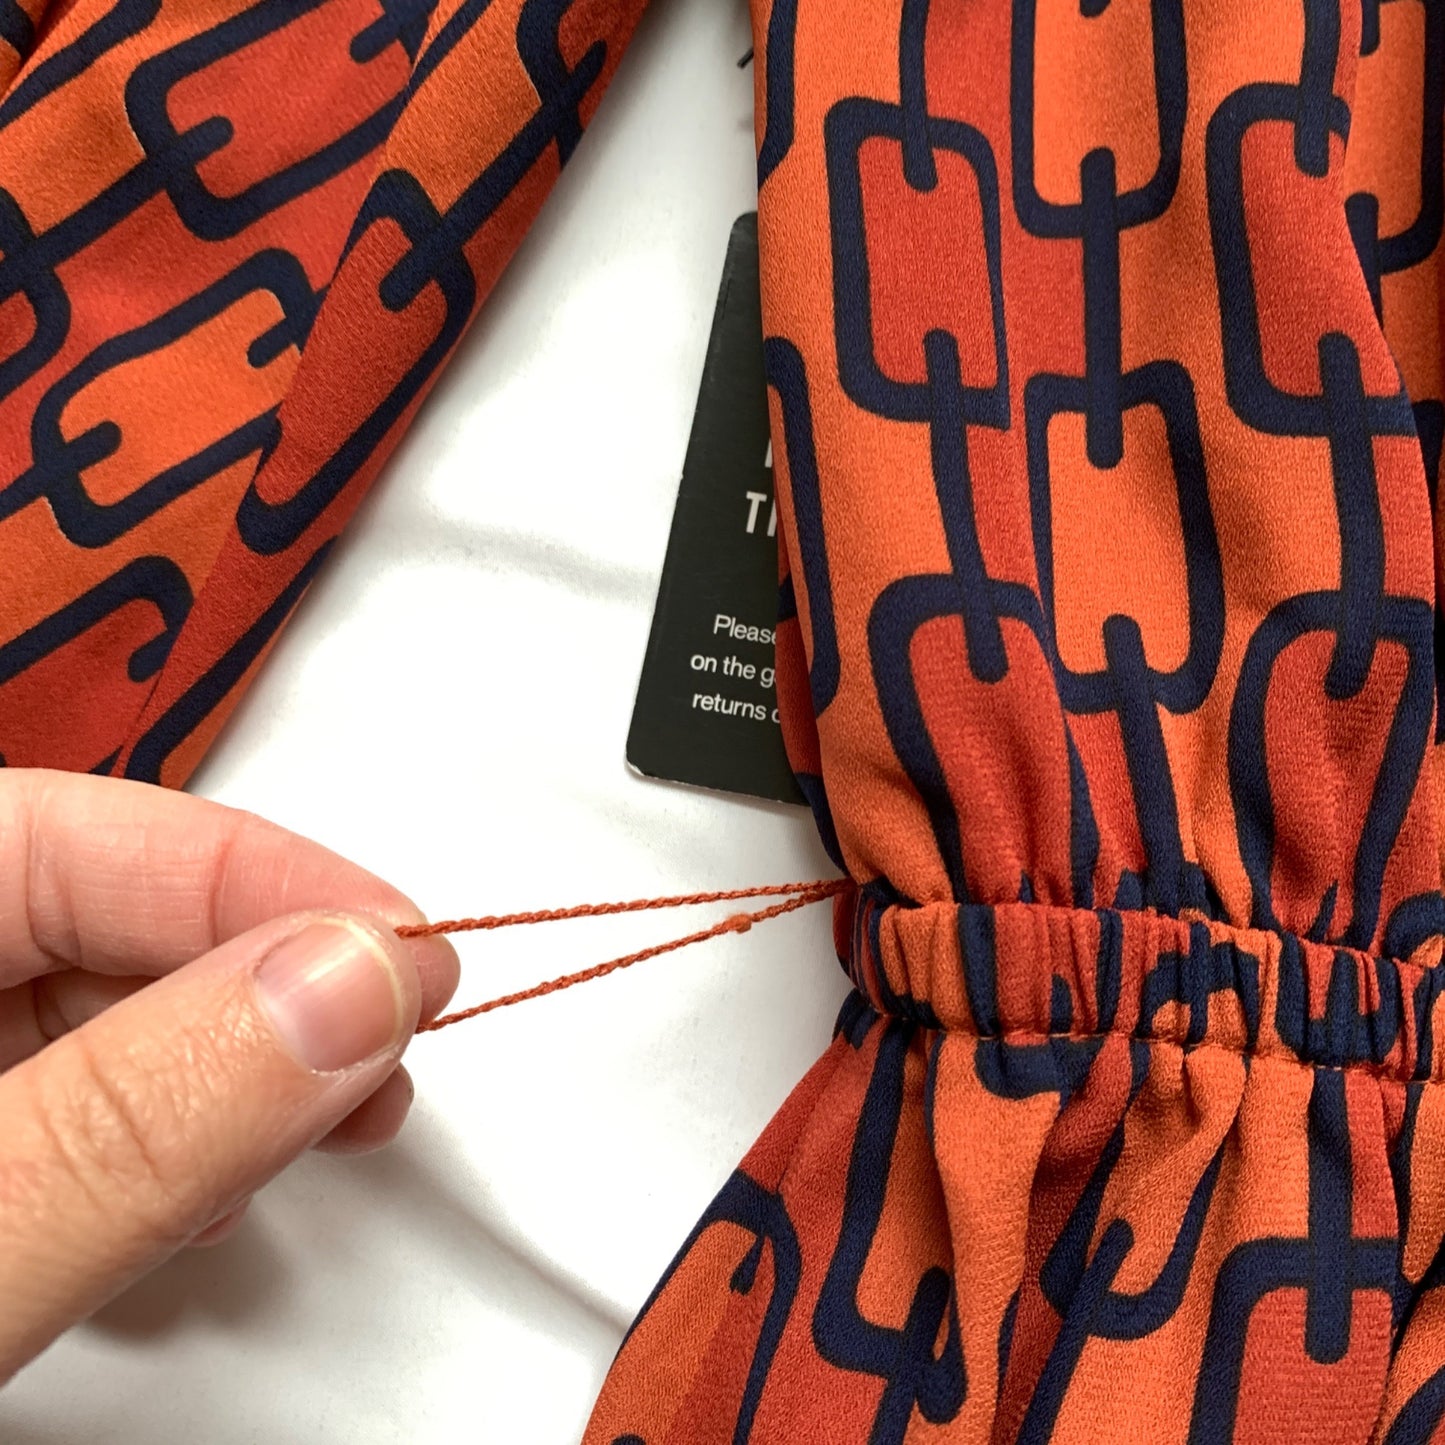 Express Orange Chain Print Dress XS New